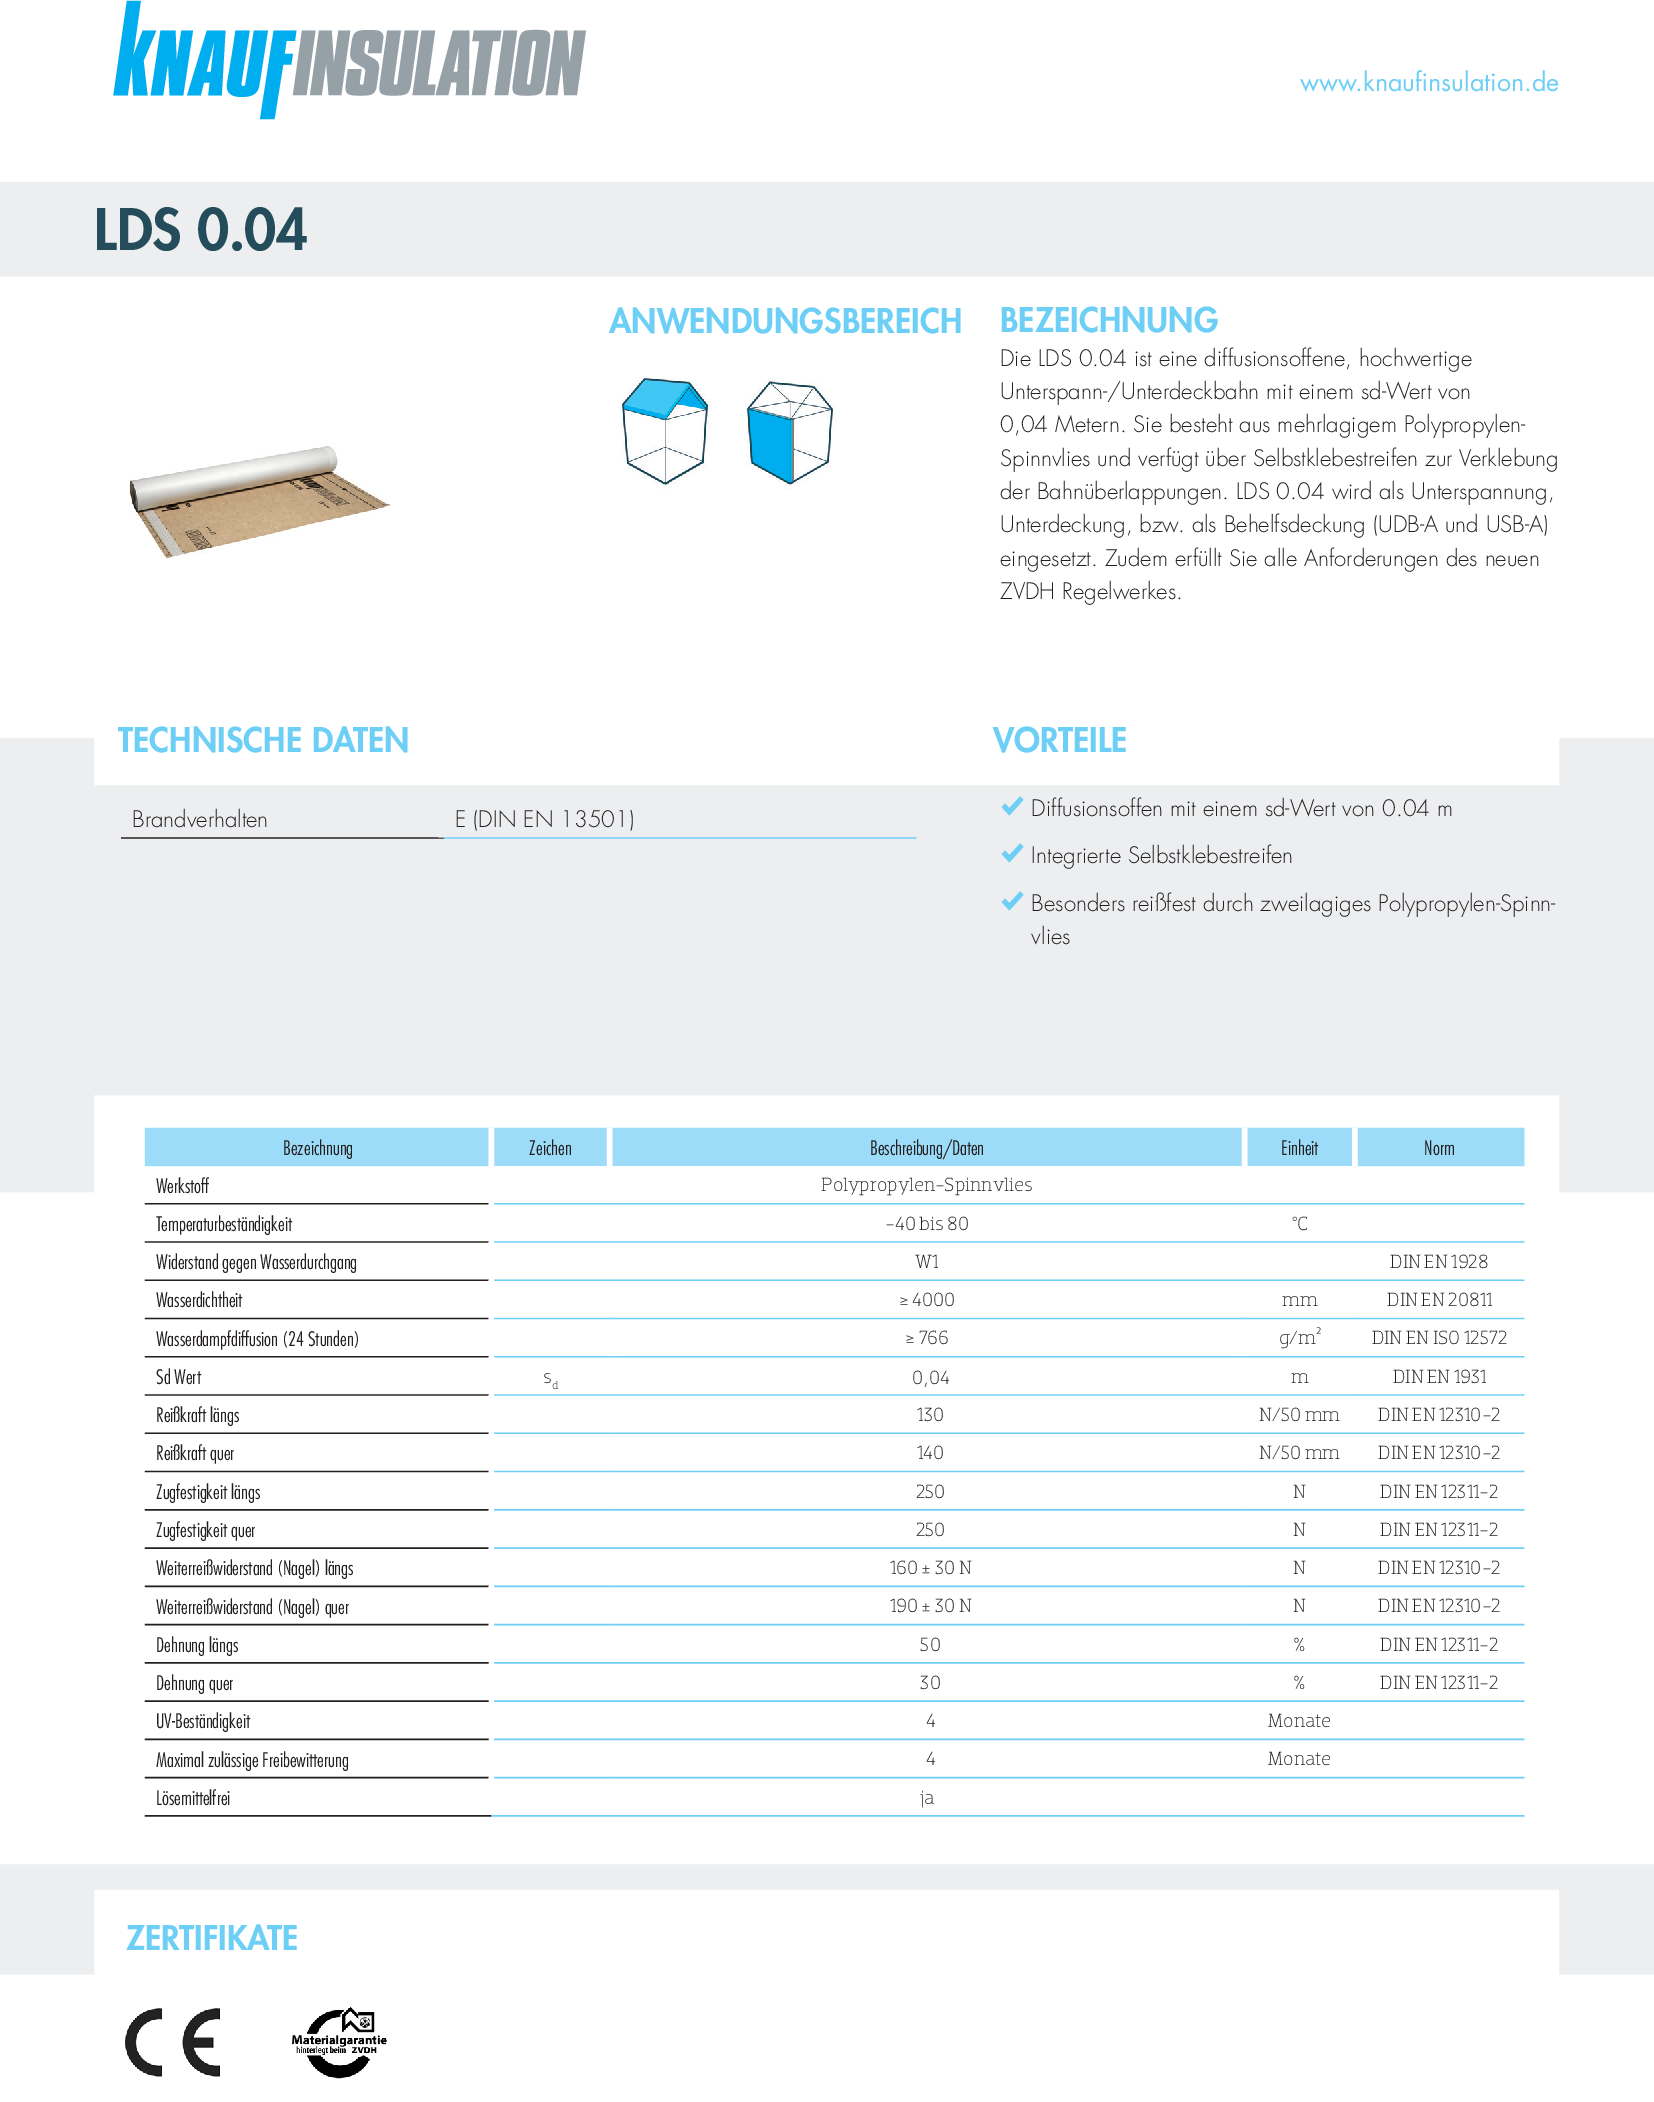 Datenblatt Knauf Insulation LDS 0.04